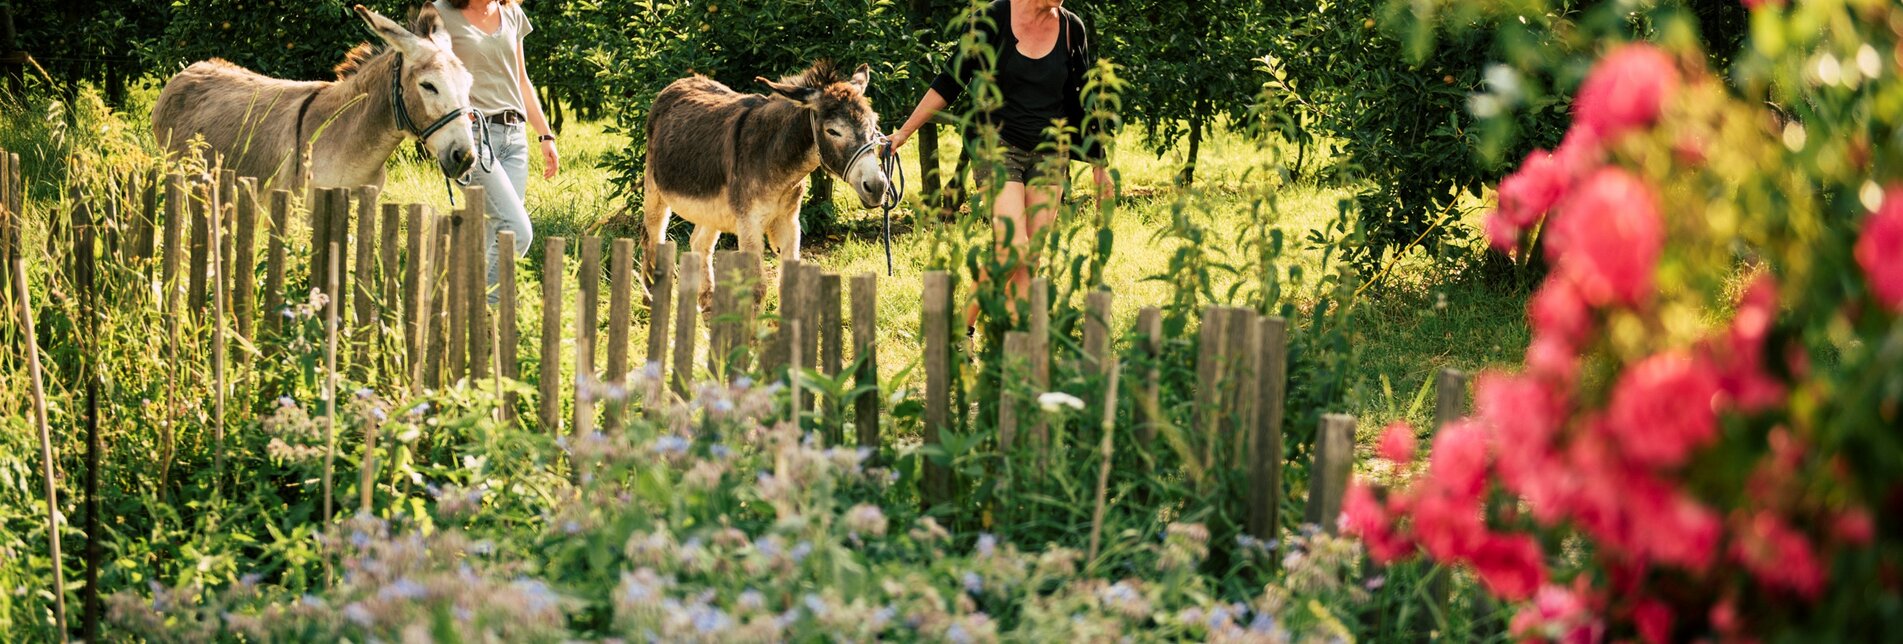 Shopping stroll with donkeys in the Pöllauer Tal Nature Park | © TV Oststeiermark | Bernhard Bergmann